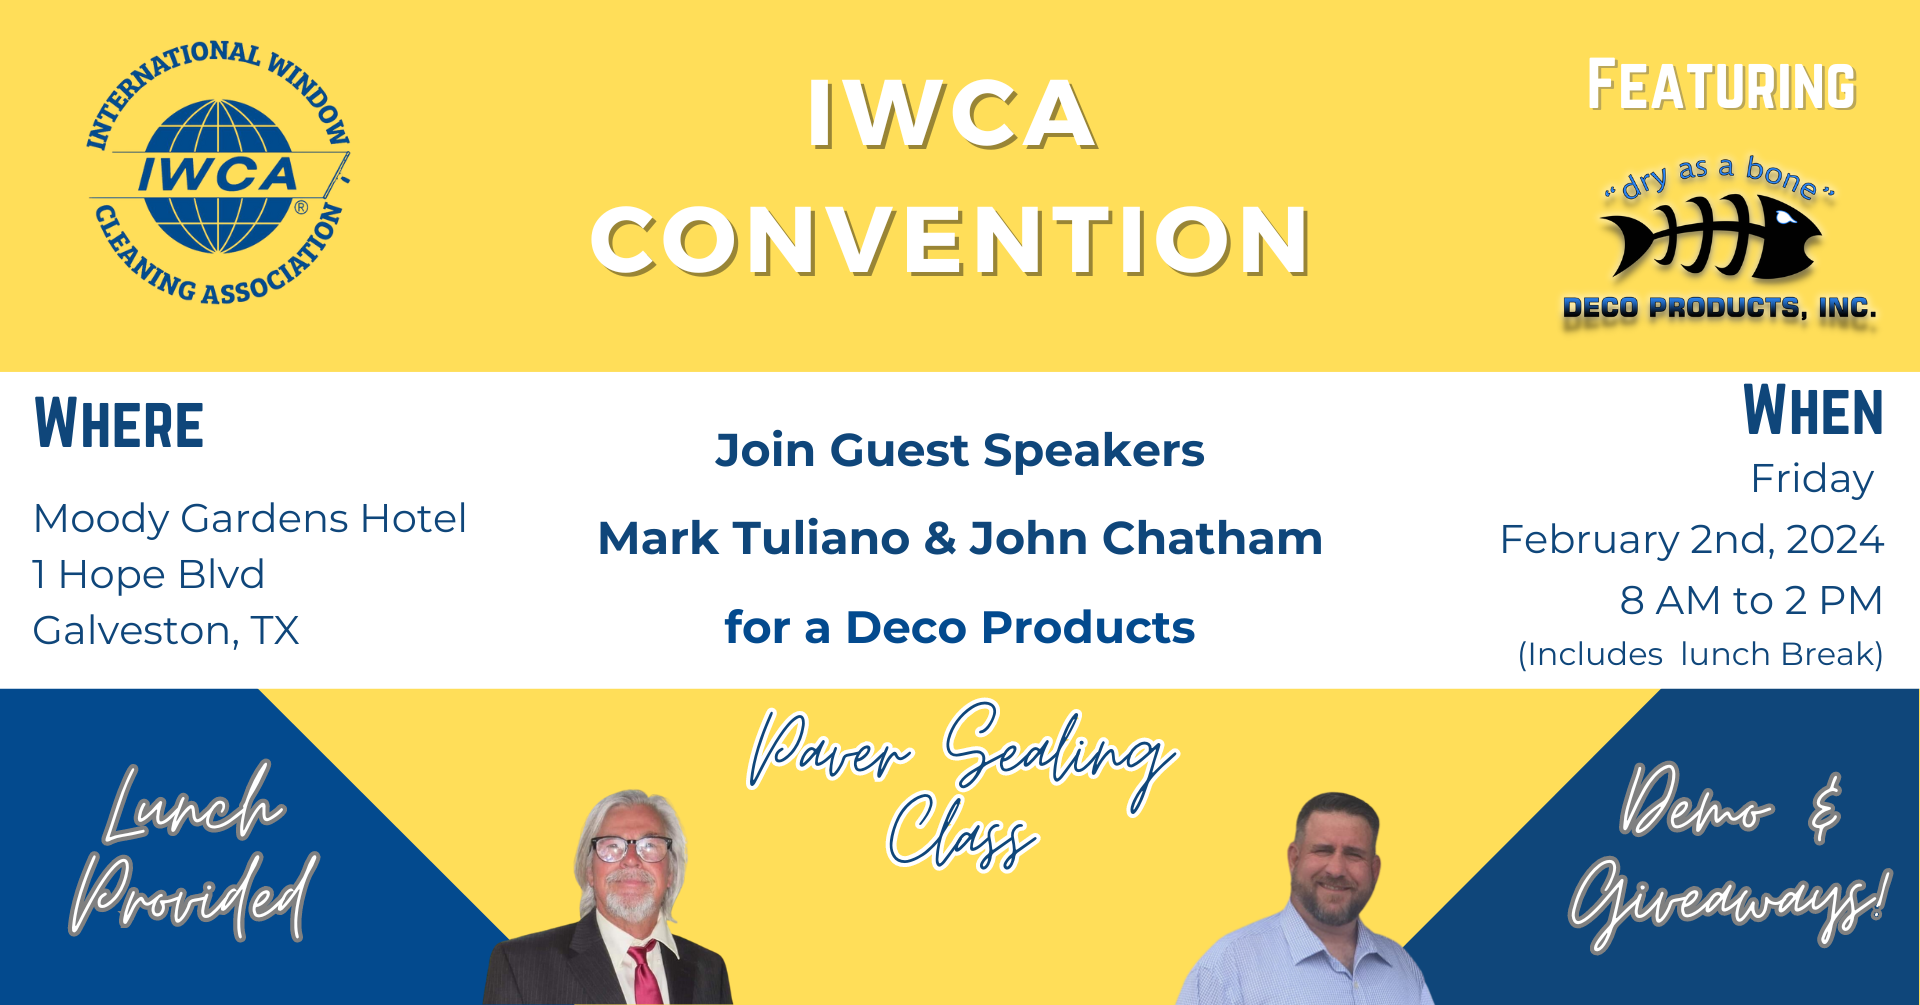 flyer regarding IWCA convention event happening in Texas